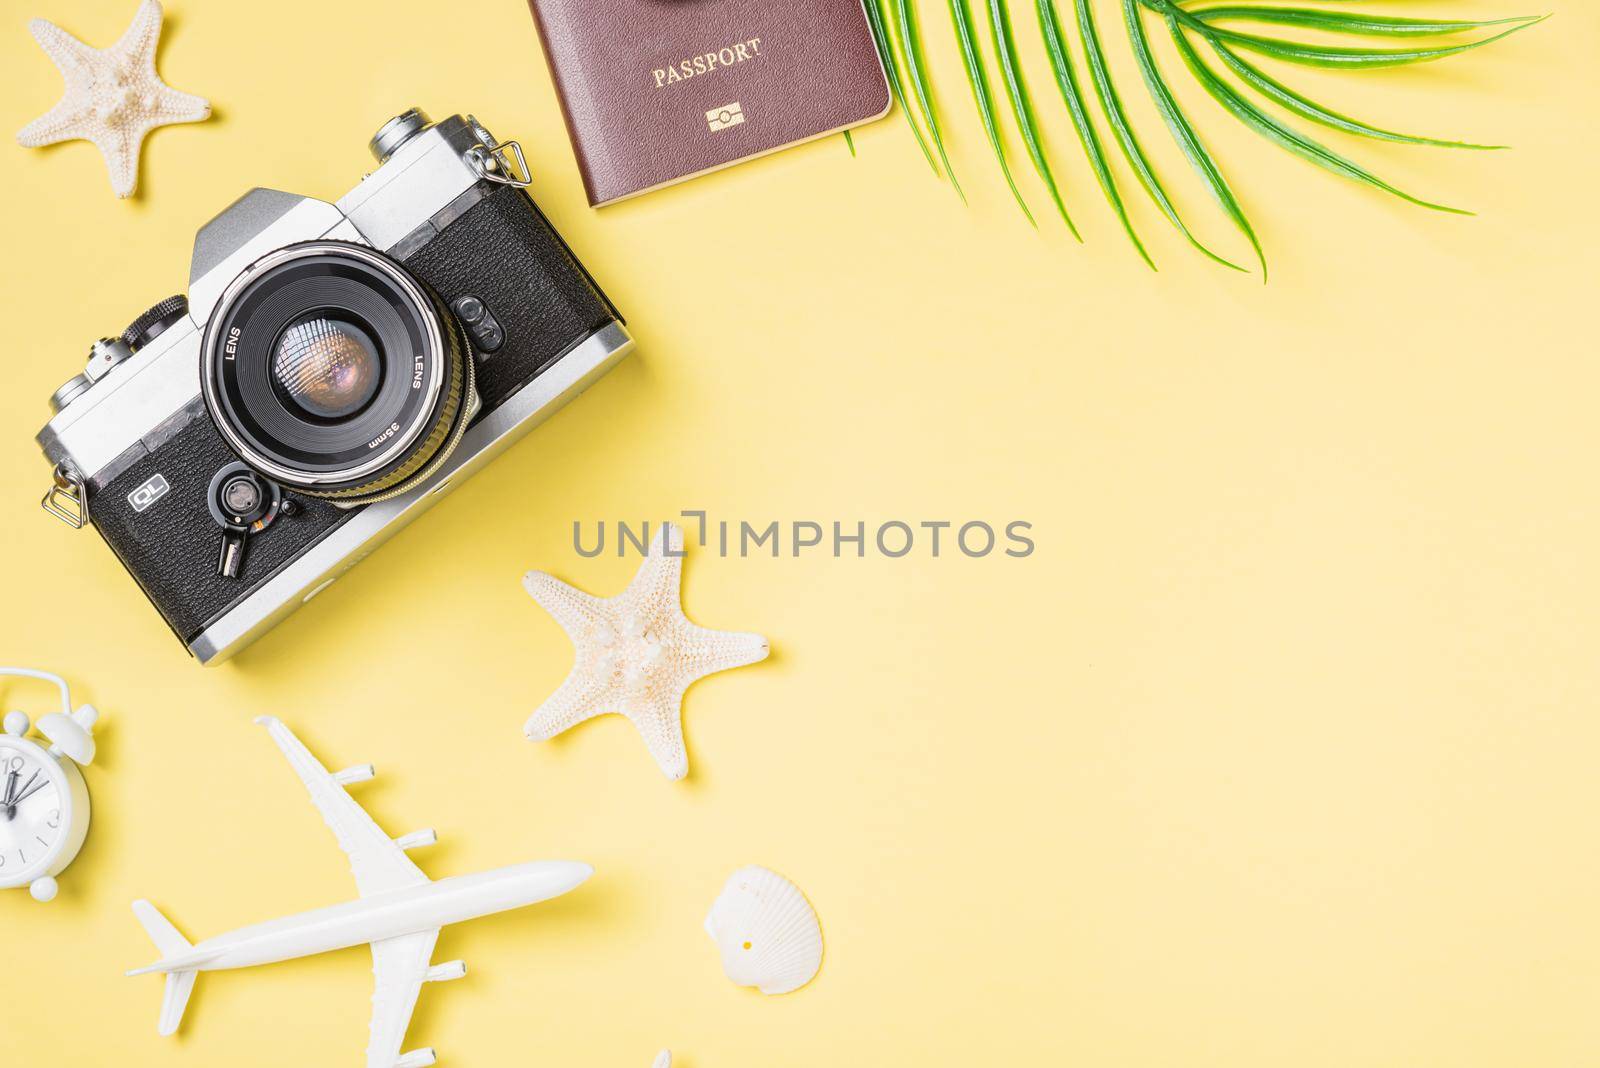 camera films, airplane, passport, starfish traveler tropical beach accessories